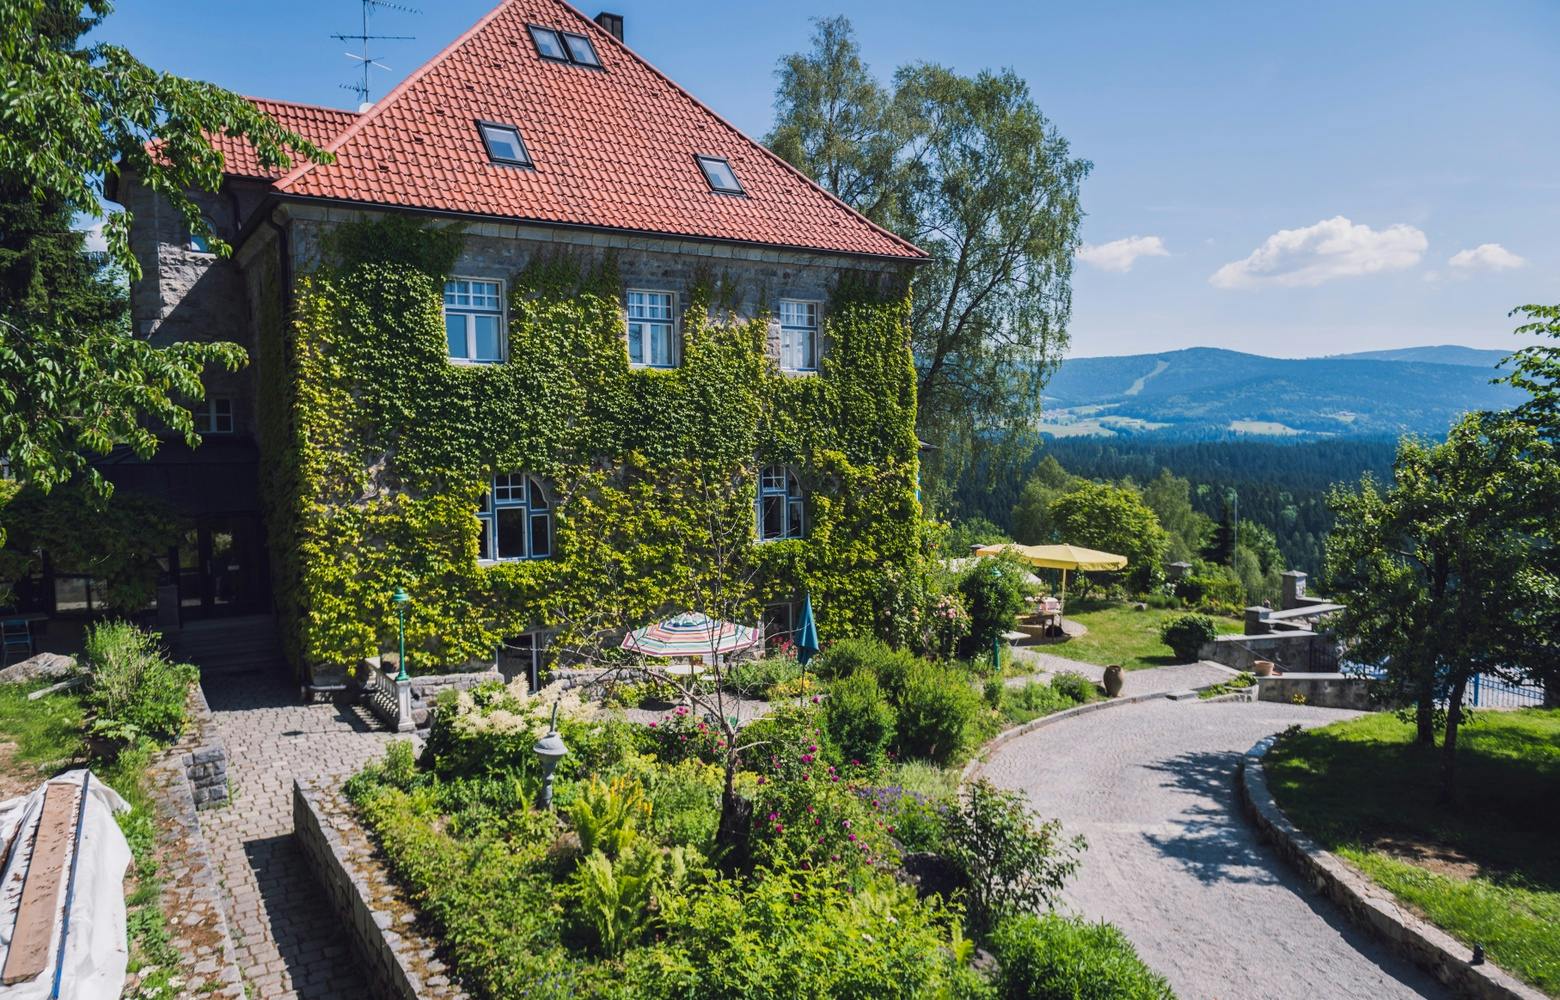 Beautiful country side villa near the czech border